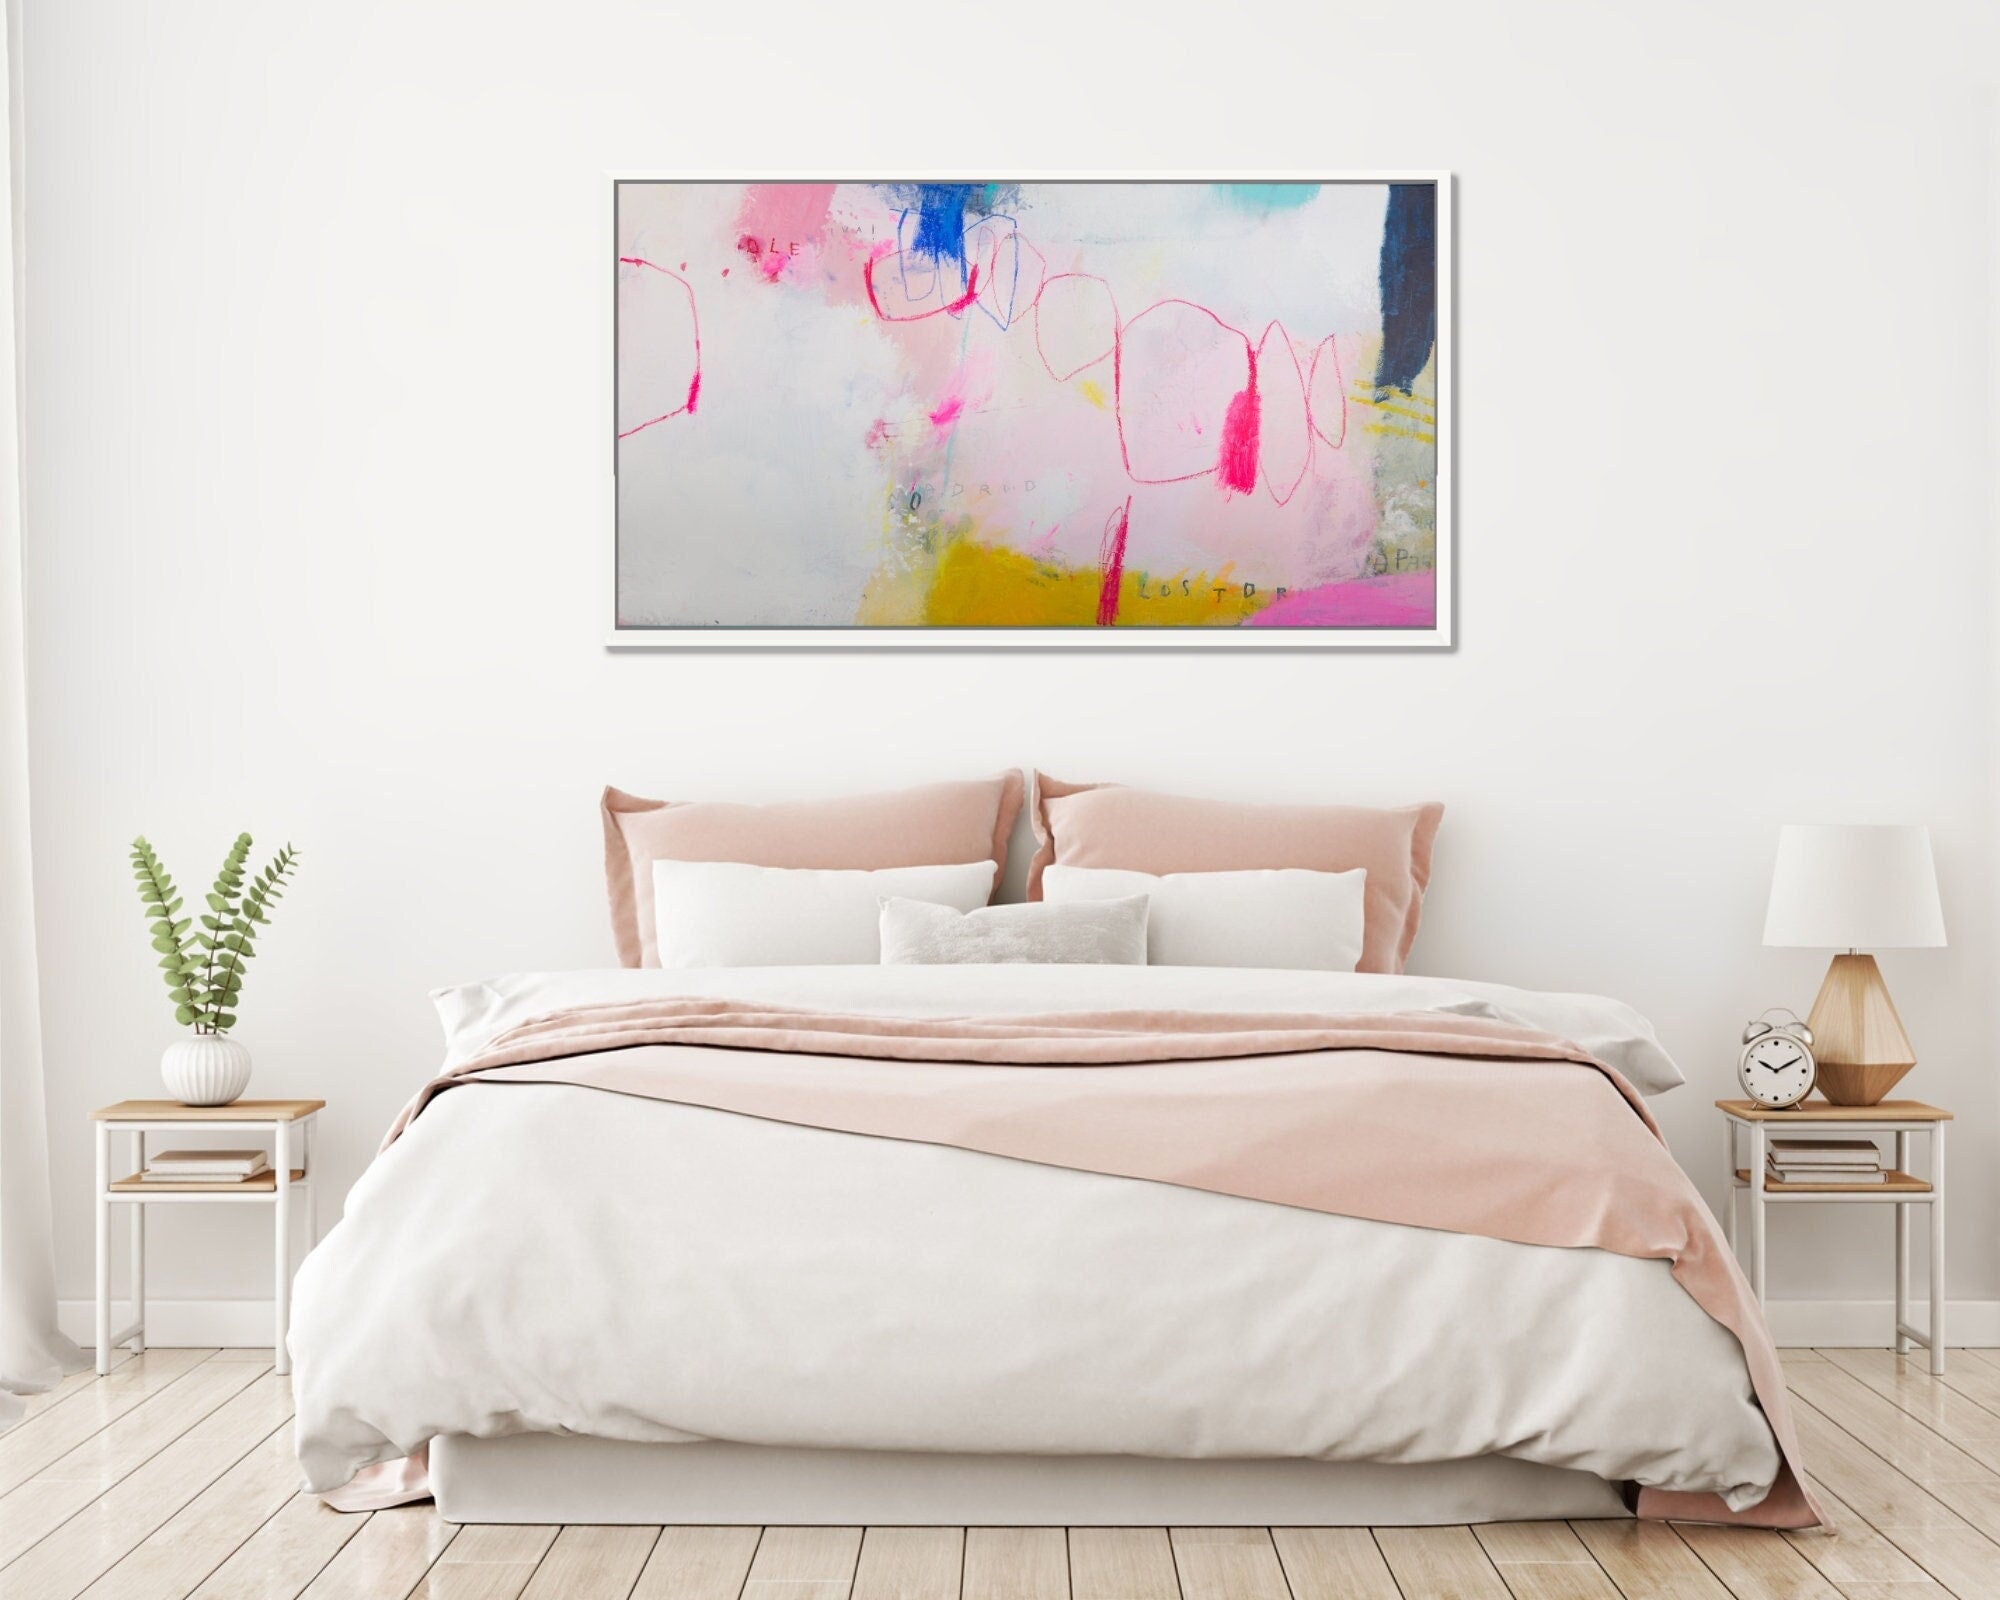 Original bunte abstrakte Malerei auf Leinwand, extra große Wandkunst hinter  dem Bett, Kunst, rosa, türkis